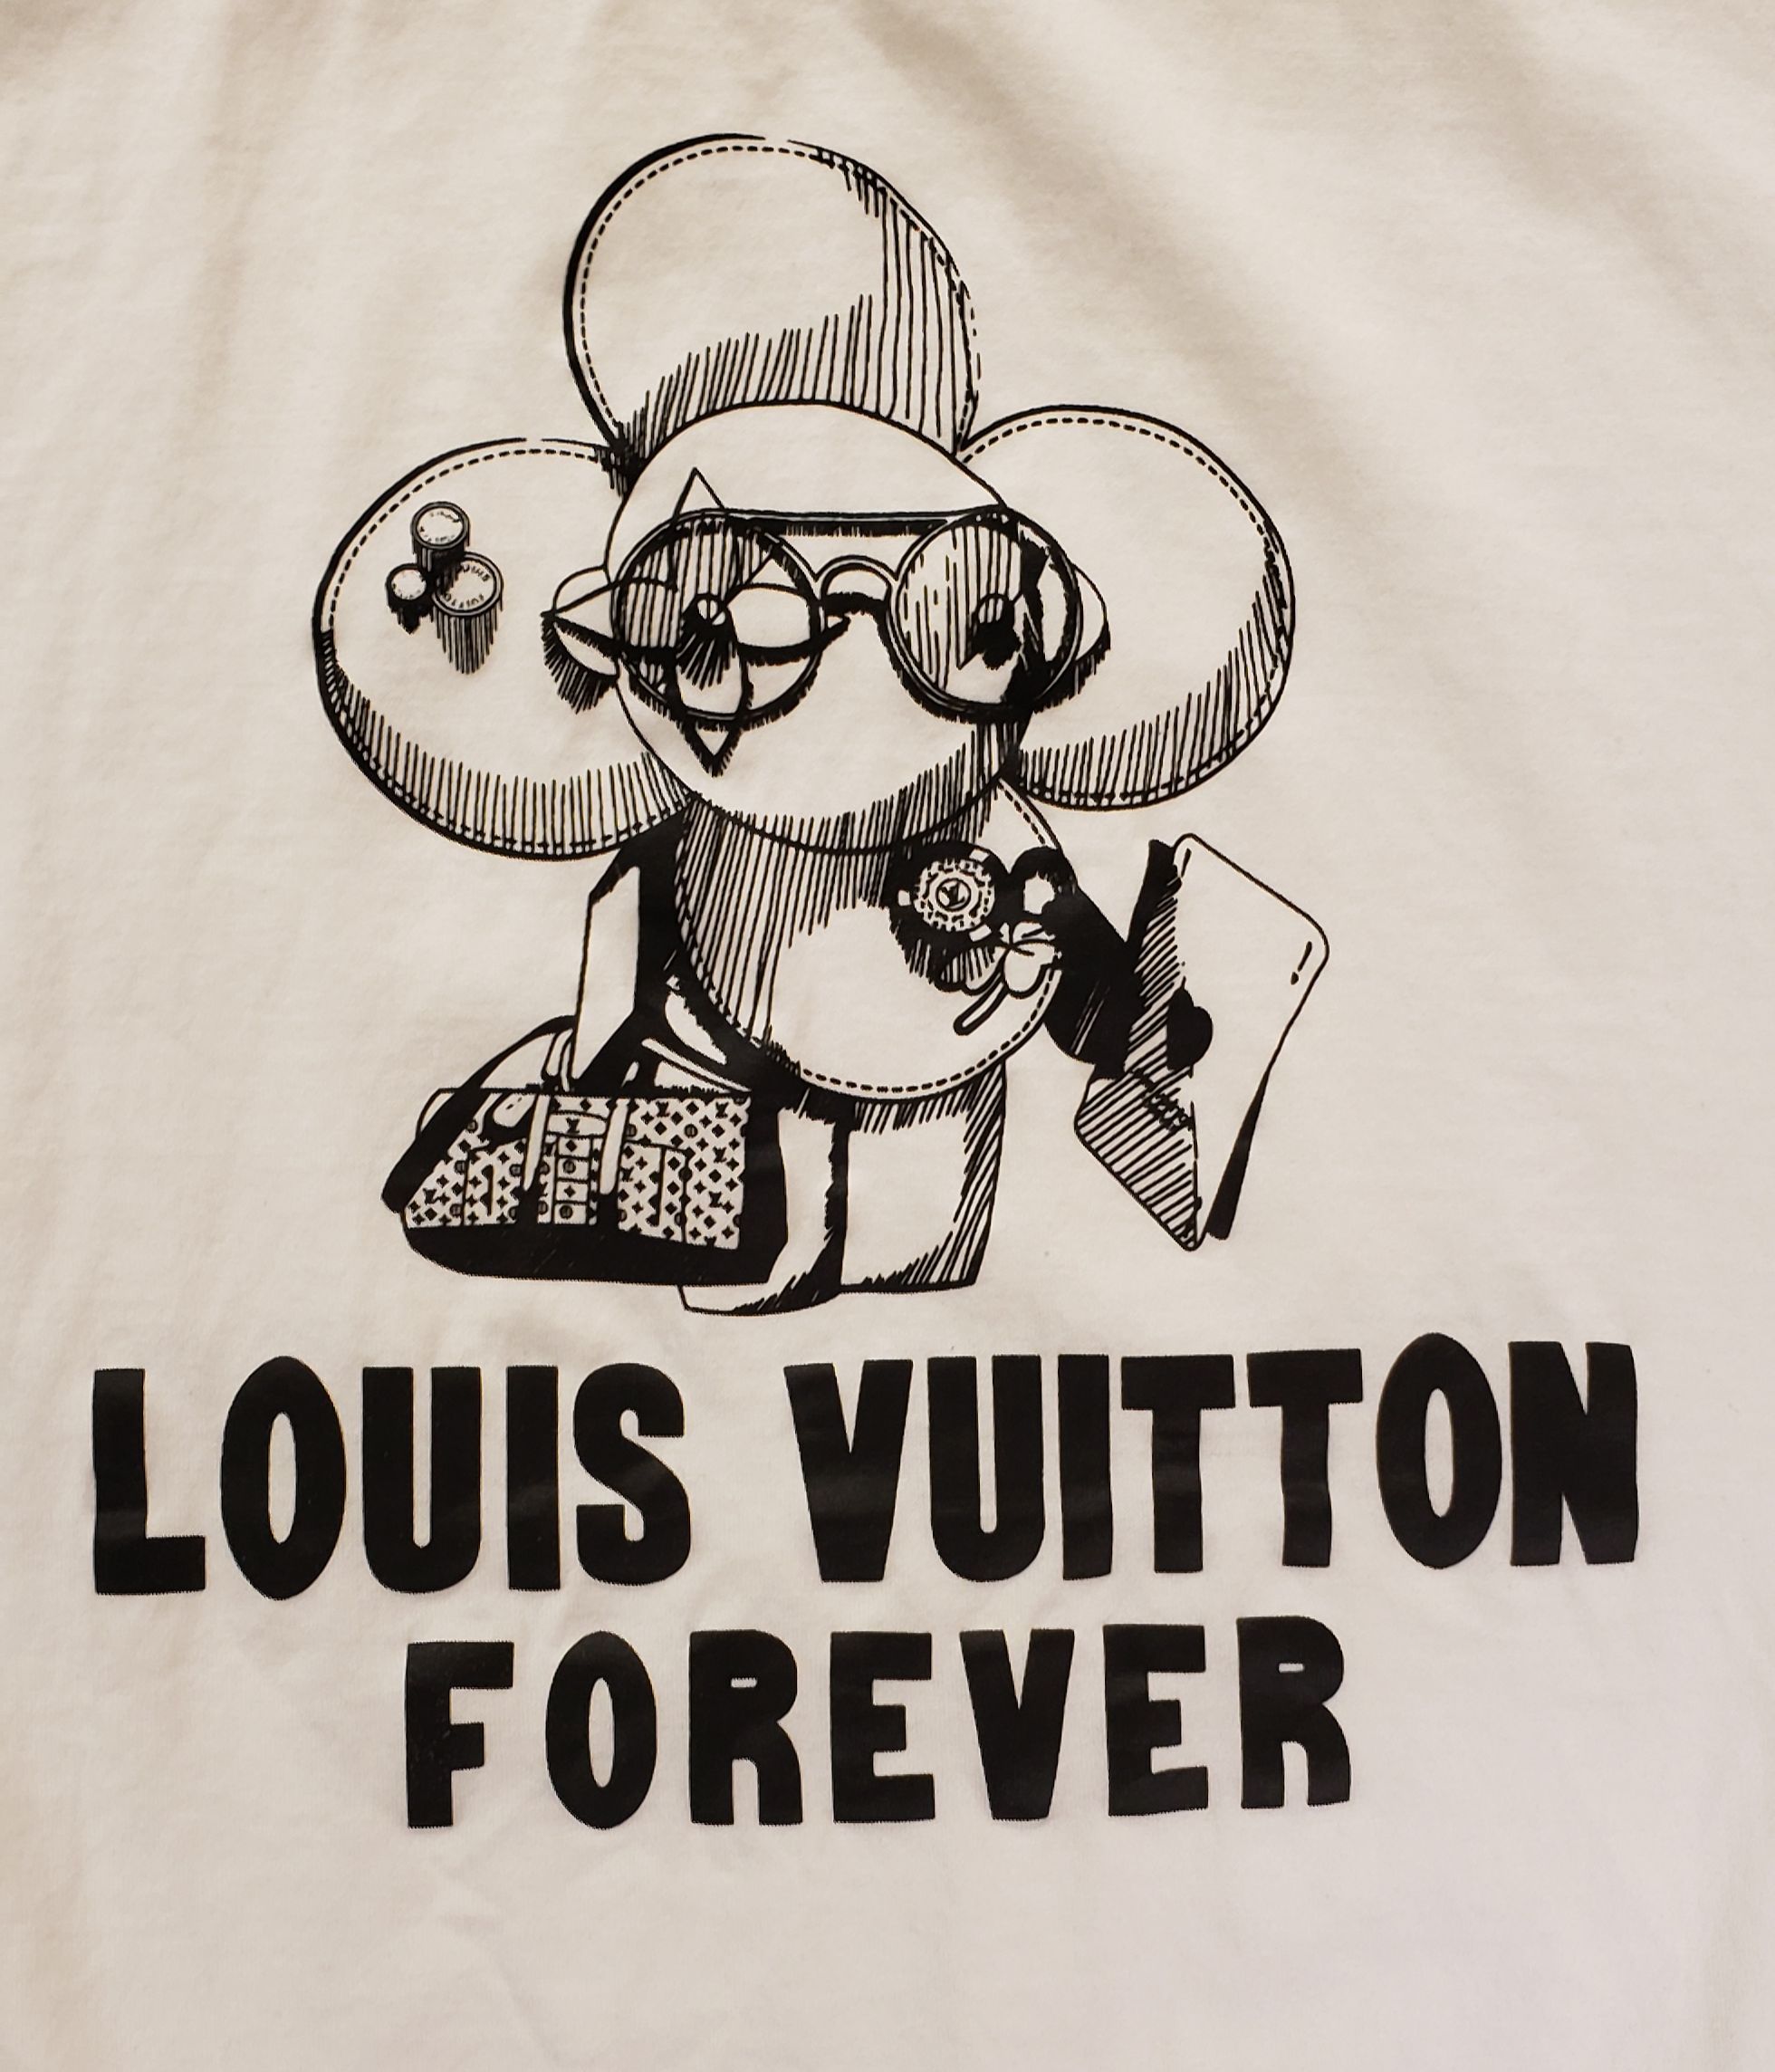 Louis Vuitton Vivienne Forever Limited Edition T-shirt Tee Shirt